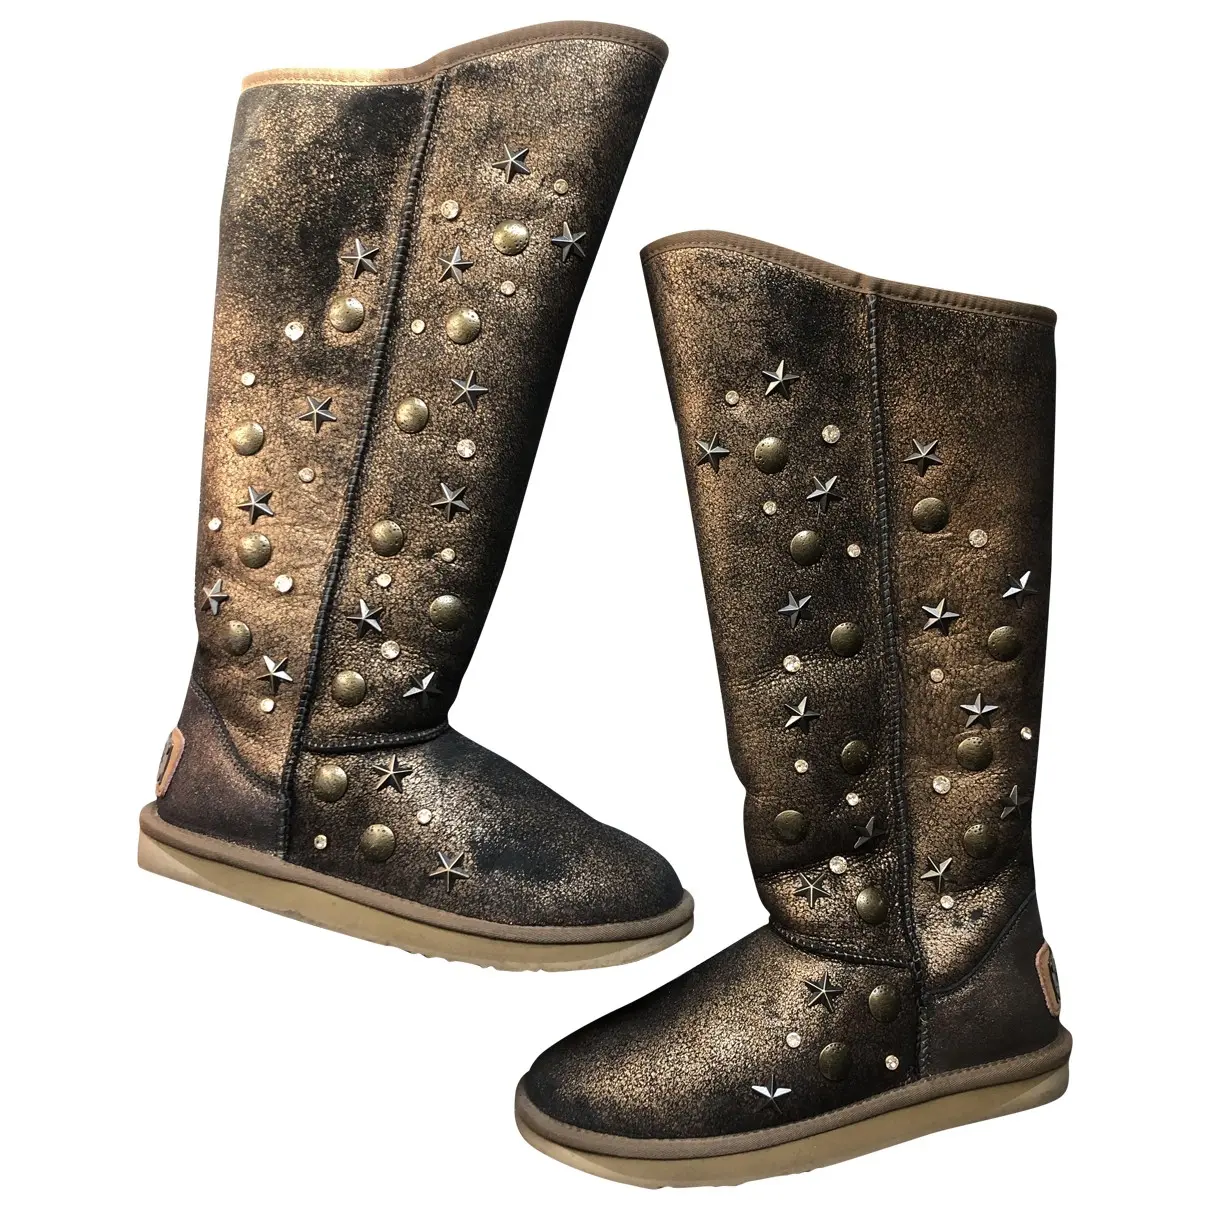 Leather snow boots Australia Luxe